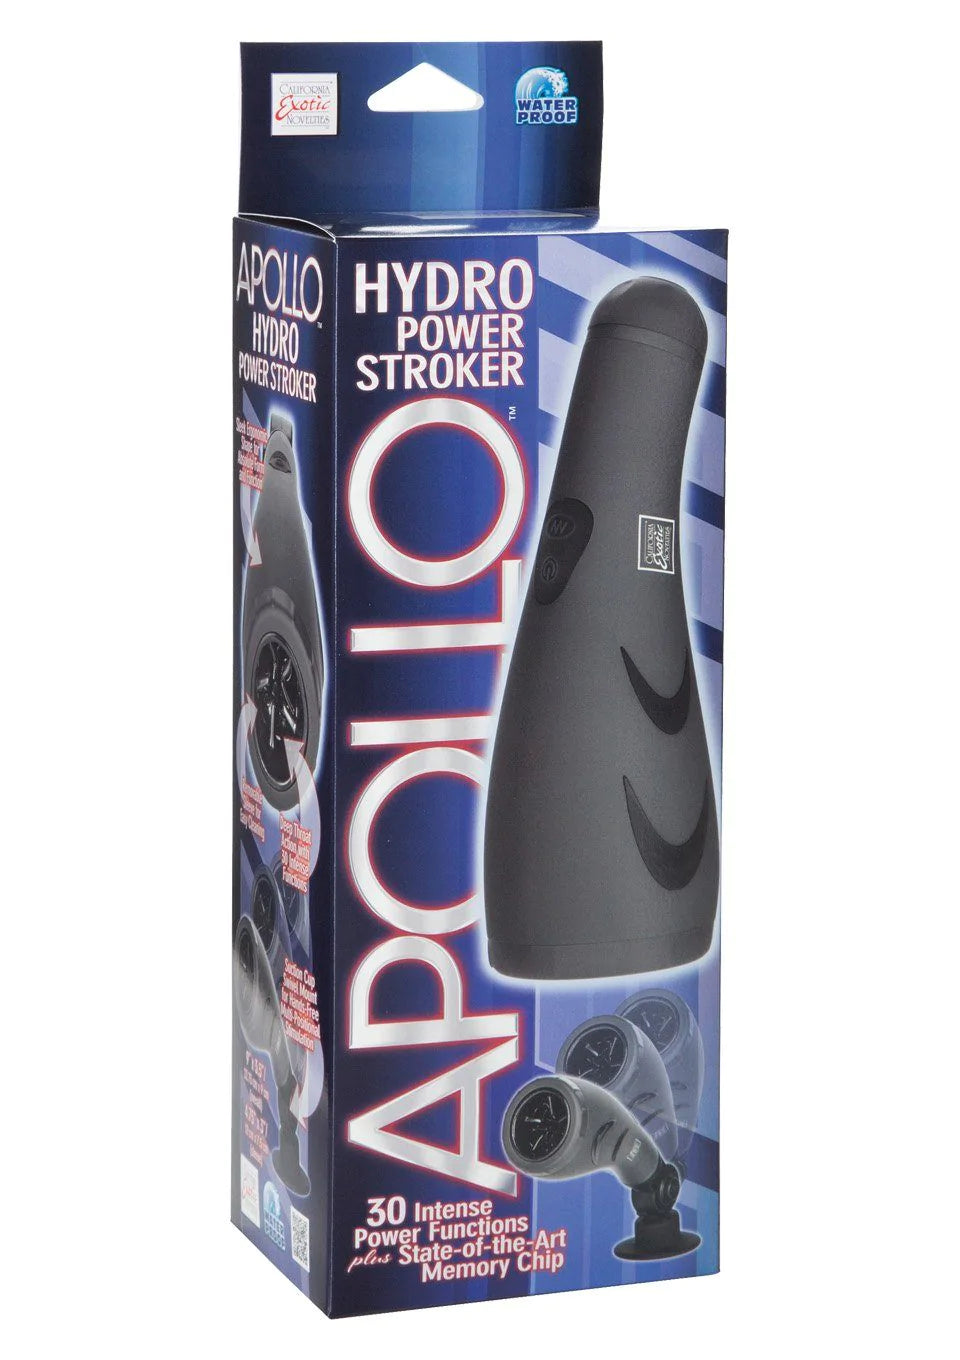 Apollo Hydro Power Stroker 